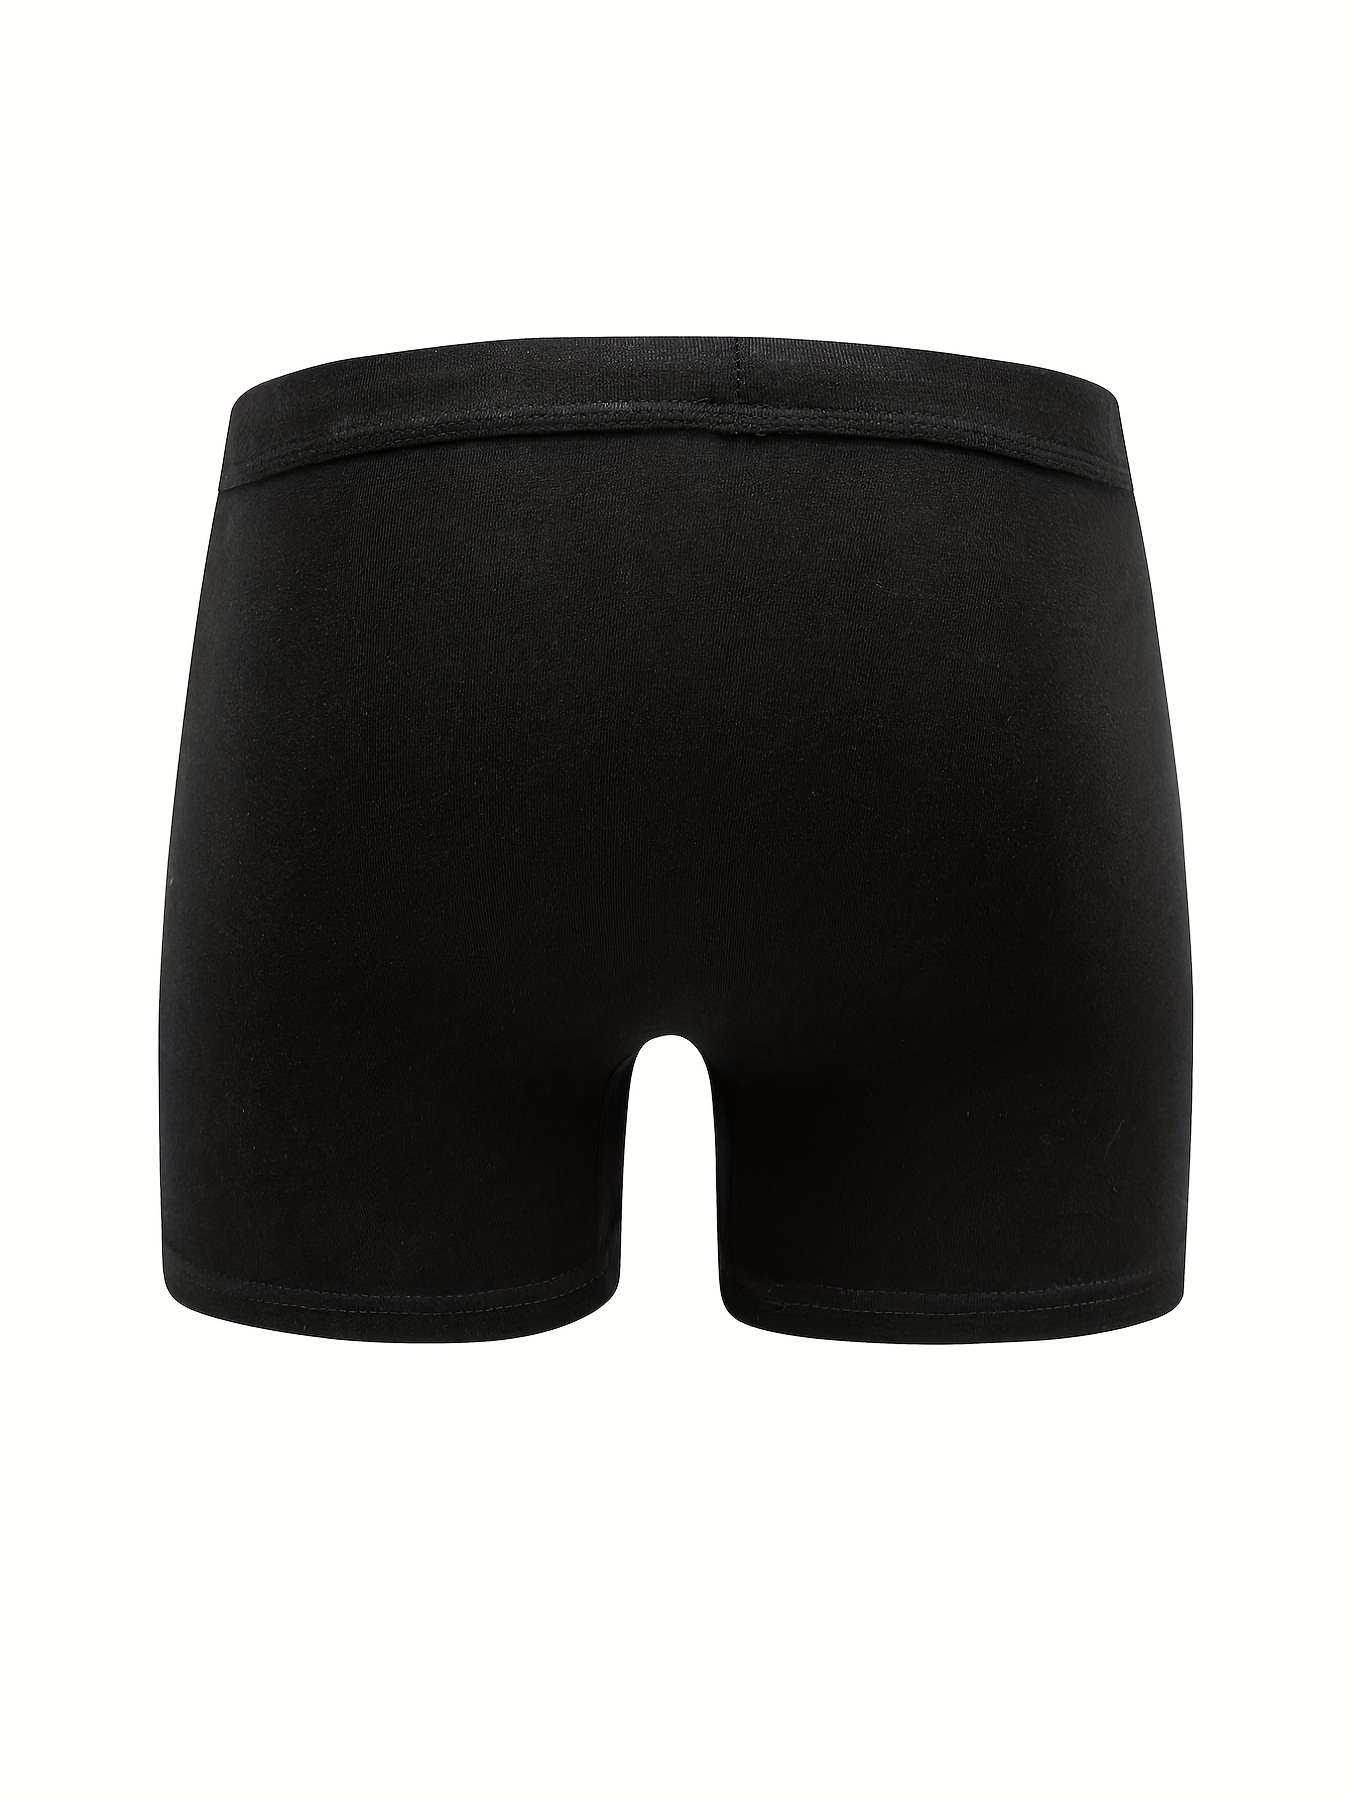 Dark grey underwear briefs for mens breathable and comfortable